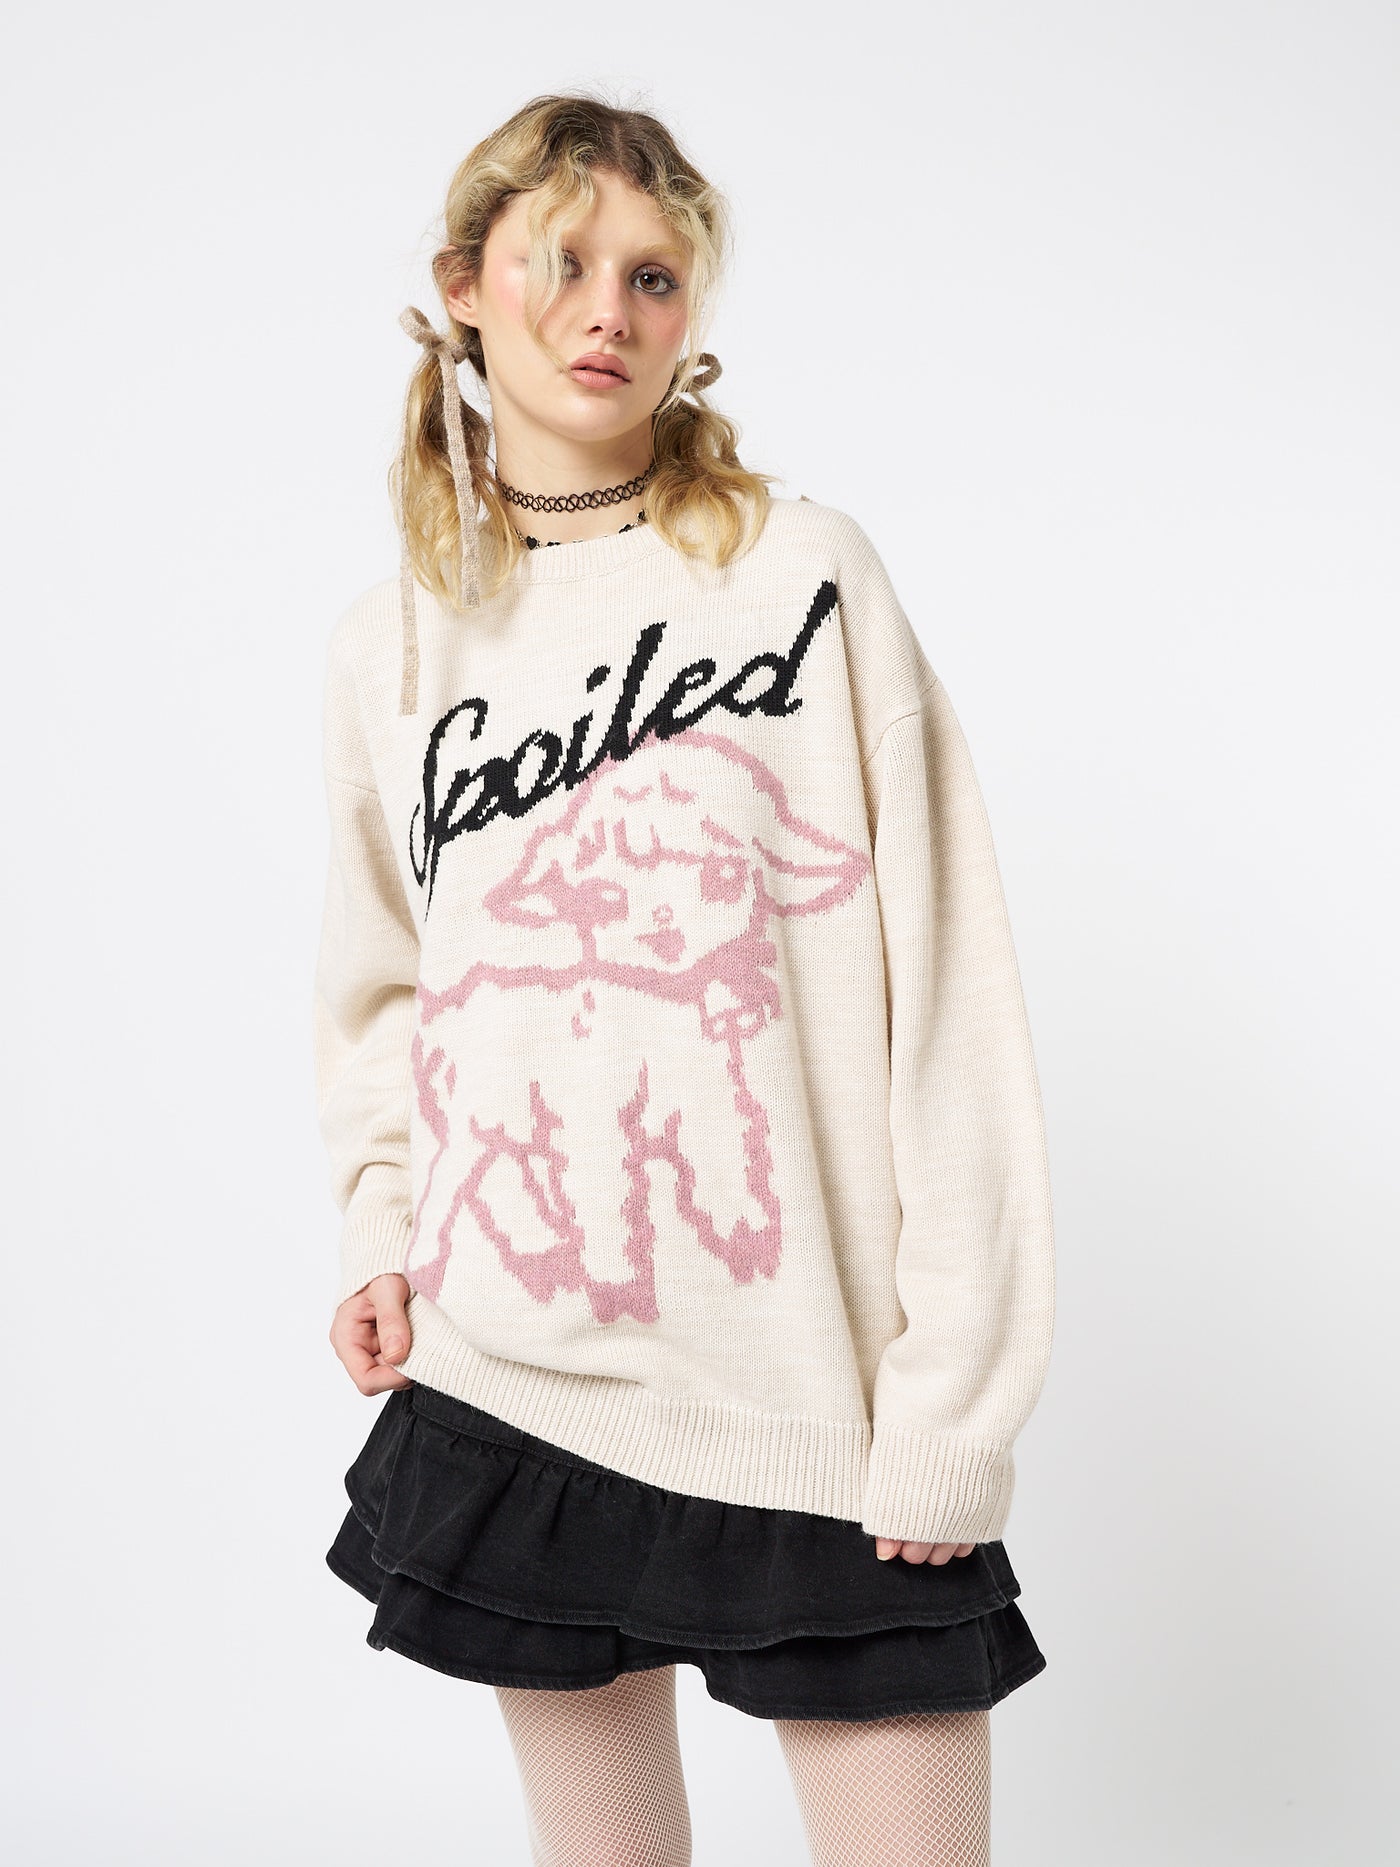 Spoiled Sheep Graphic Knitted Sweater - Minga London